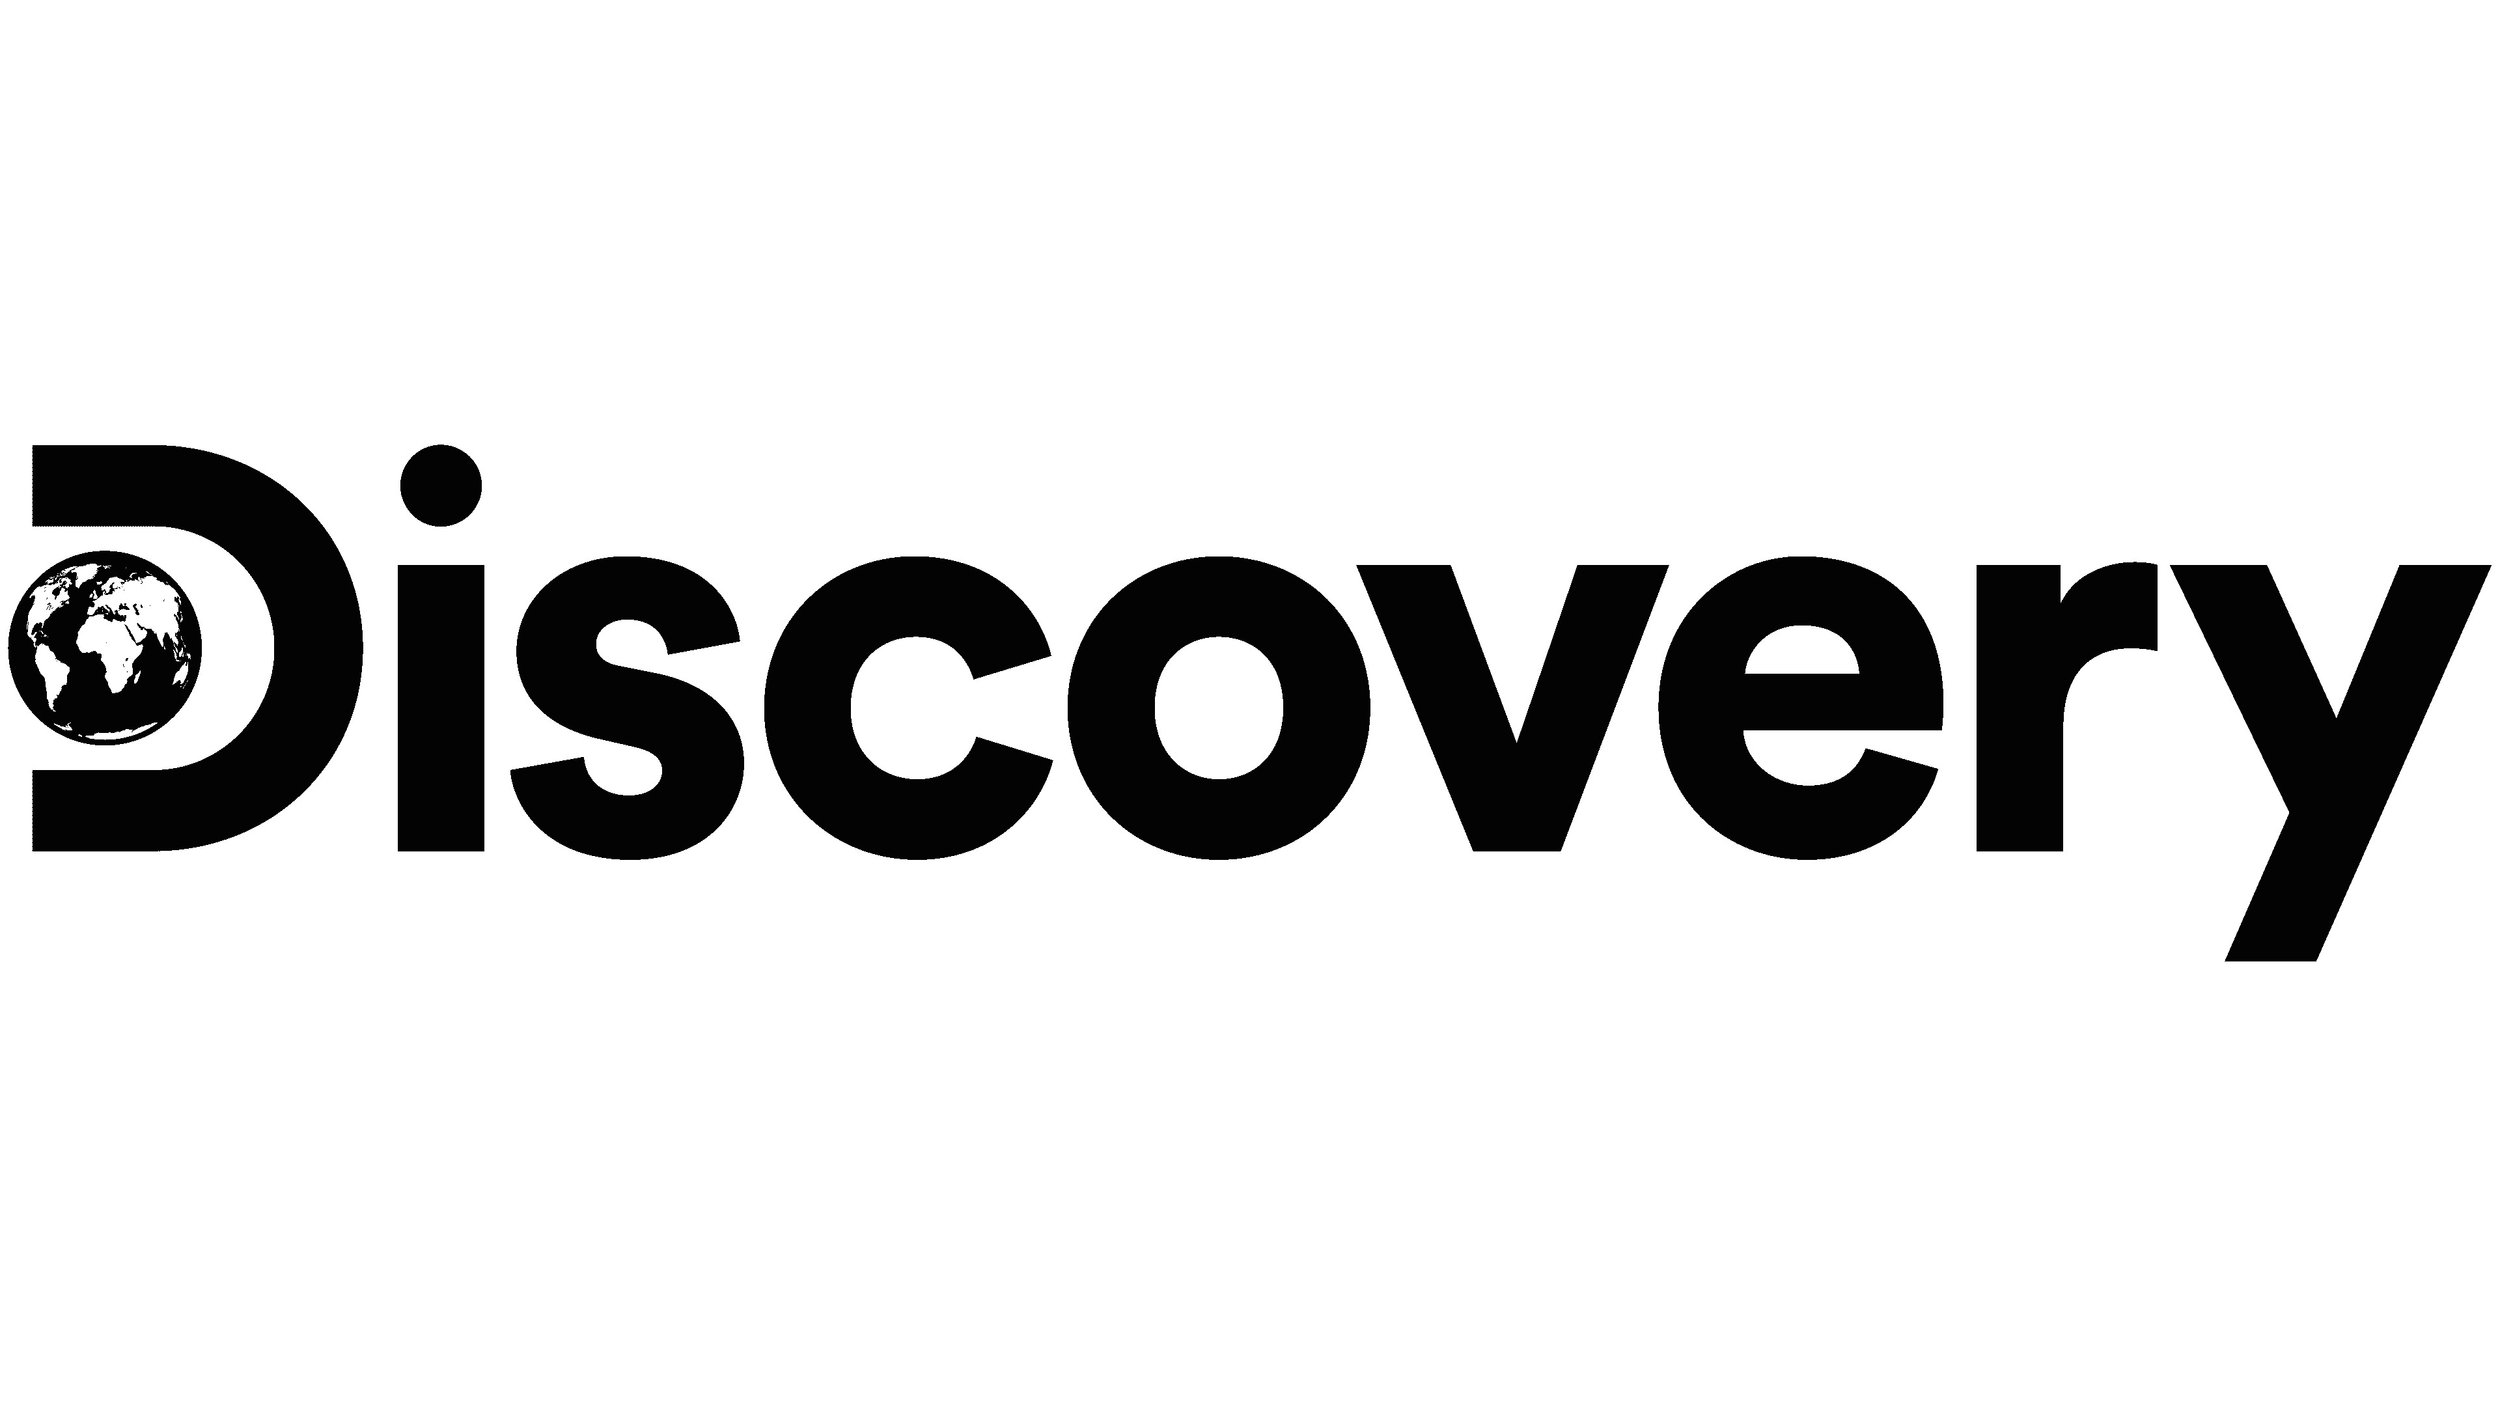 Discovery-Channel-Logo.jpg